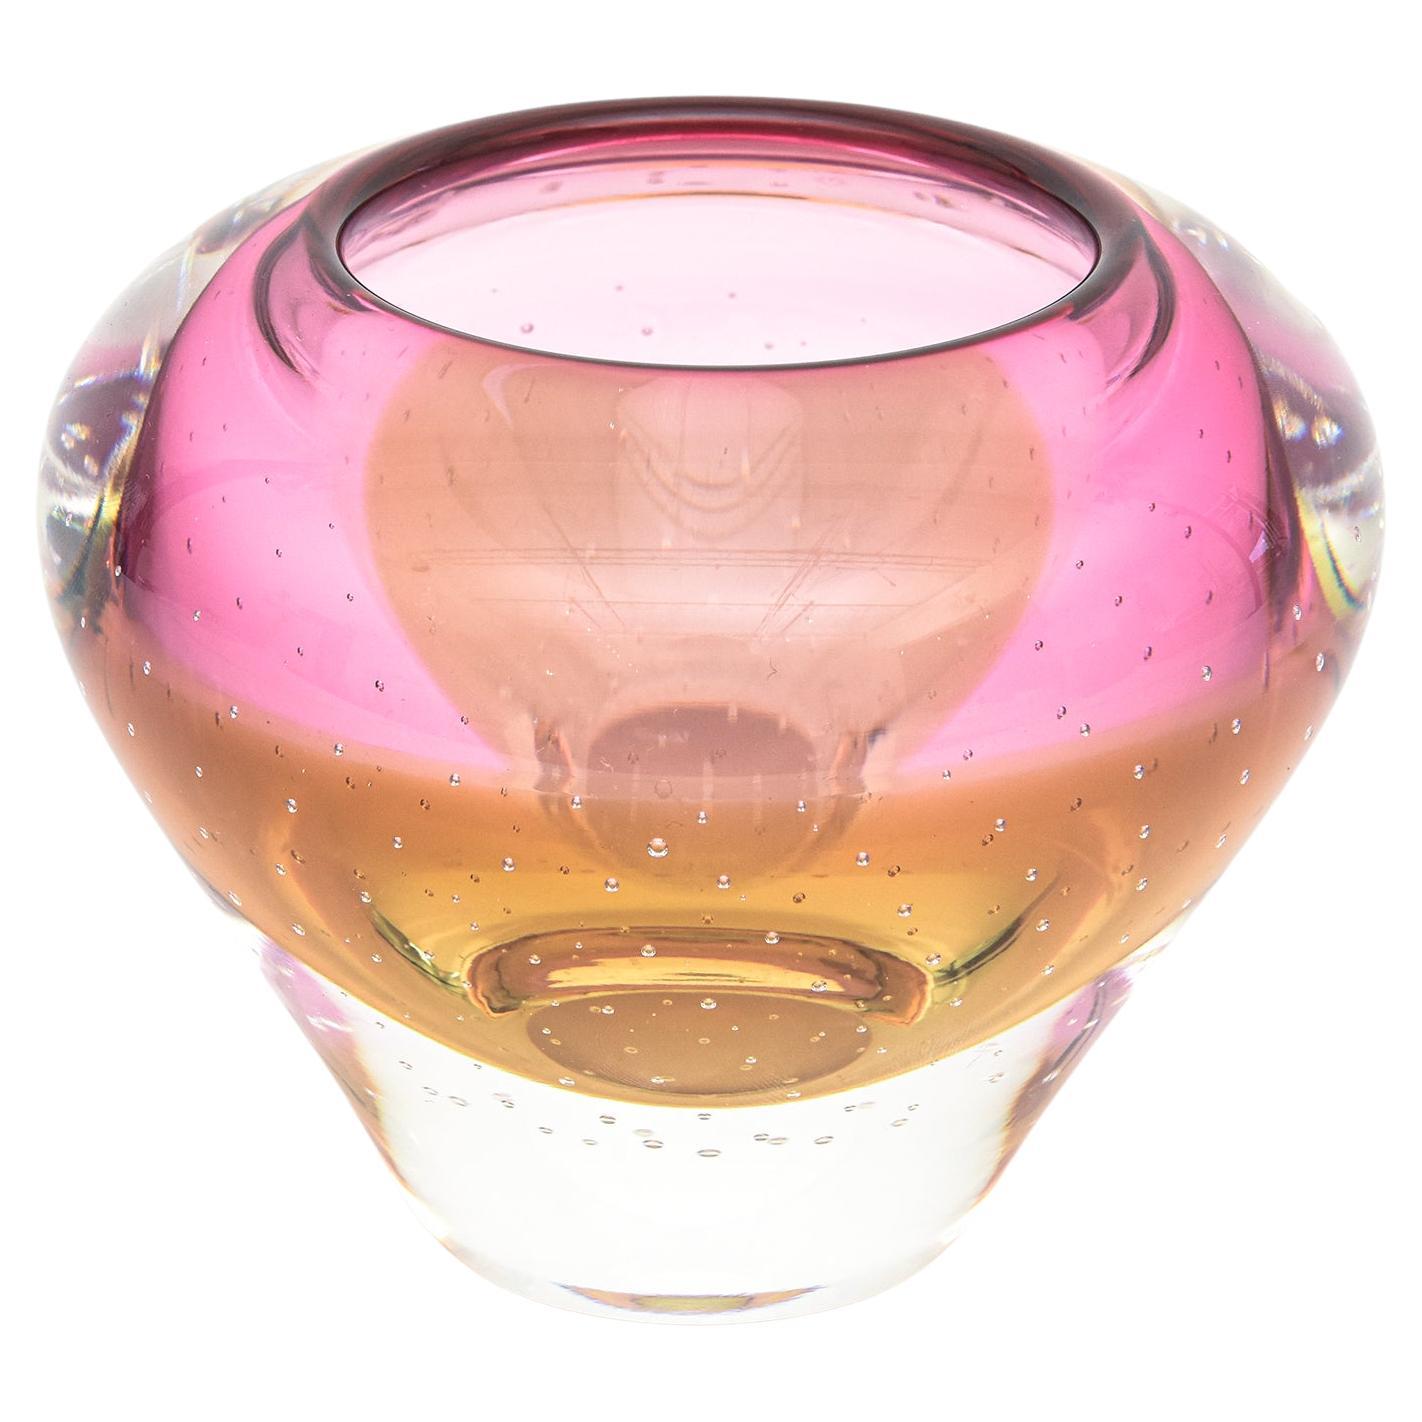 Vase en cristal Waterford signé Evolution avec rose canneberge, ambre, transparent